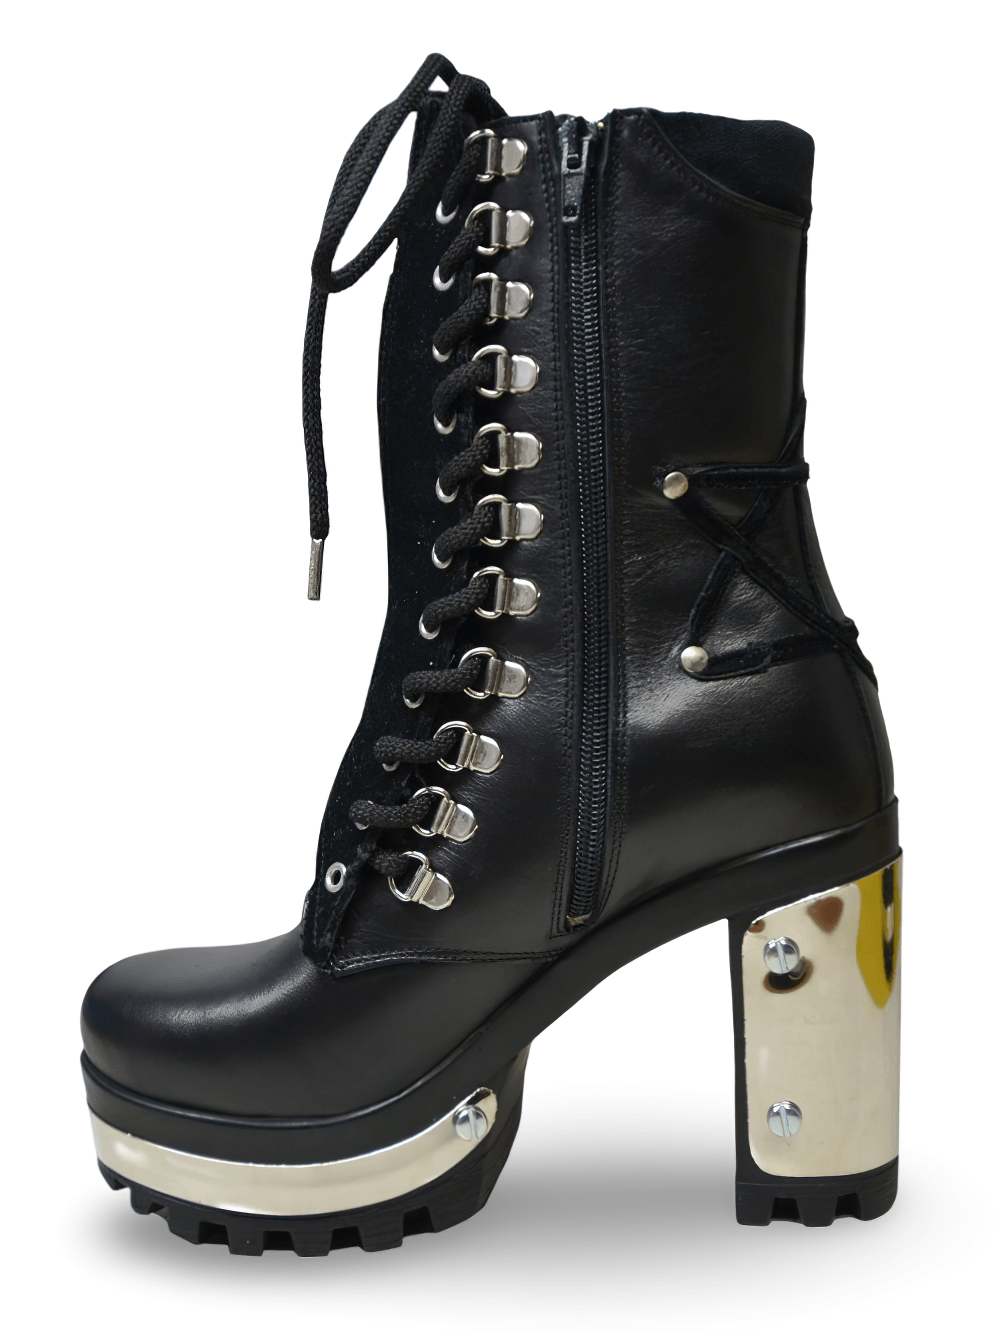 Women's Studded Zip-Up Platform Boots with High Heels